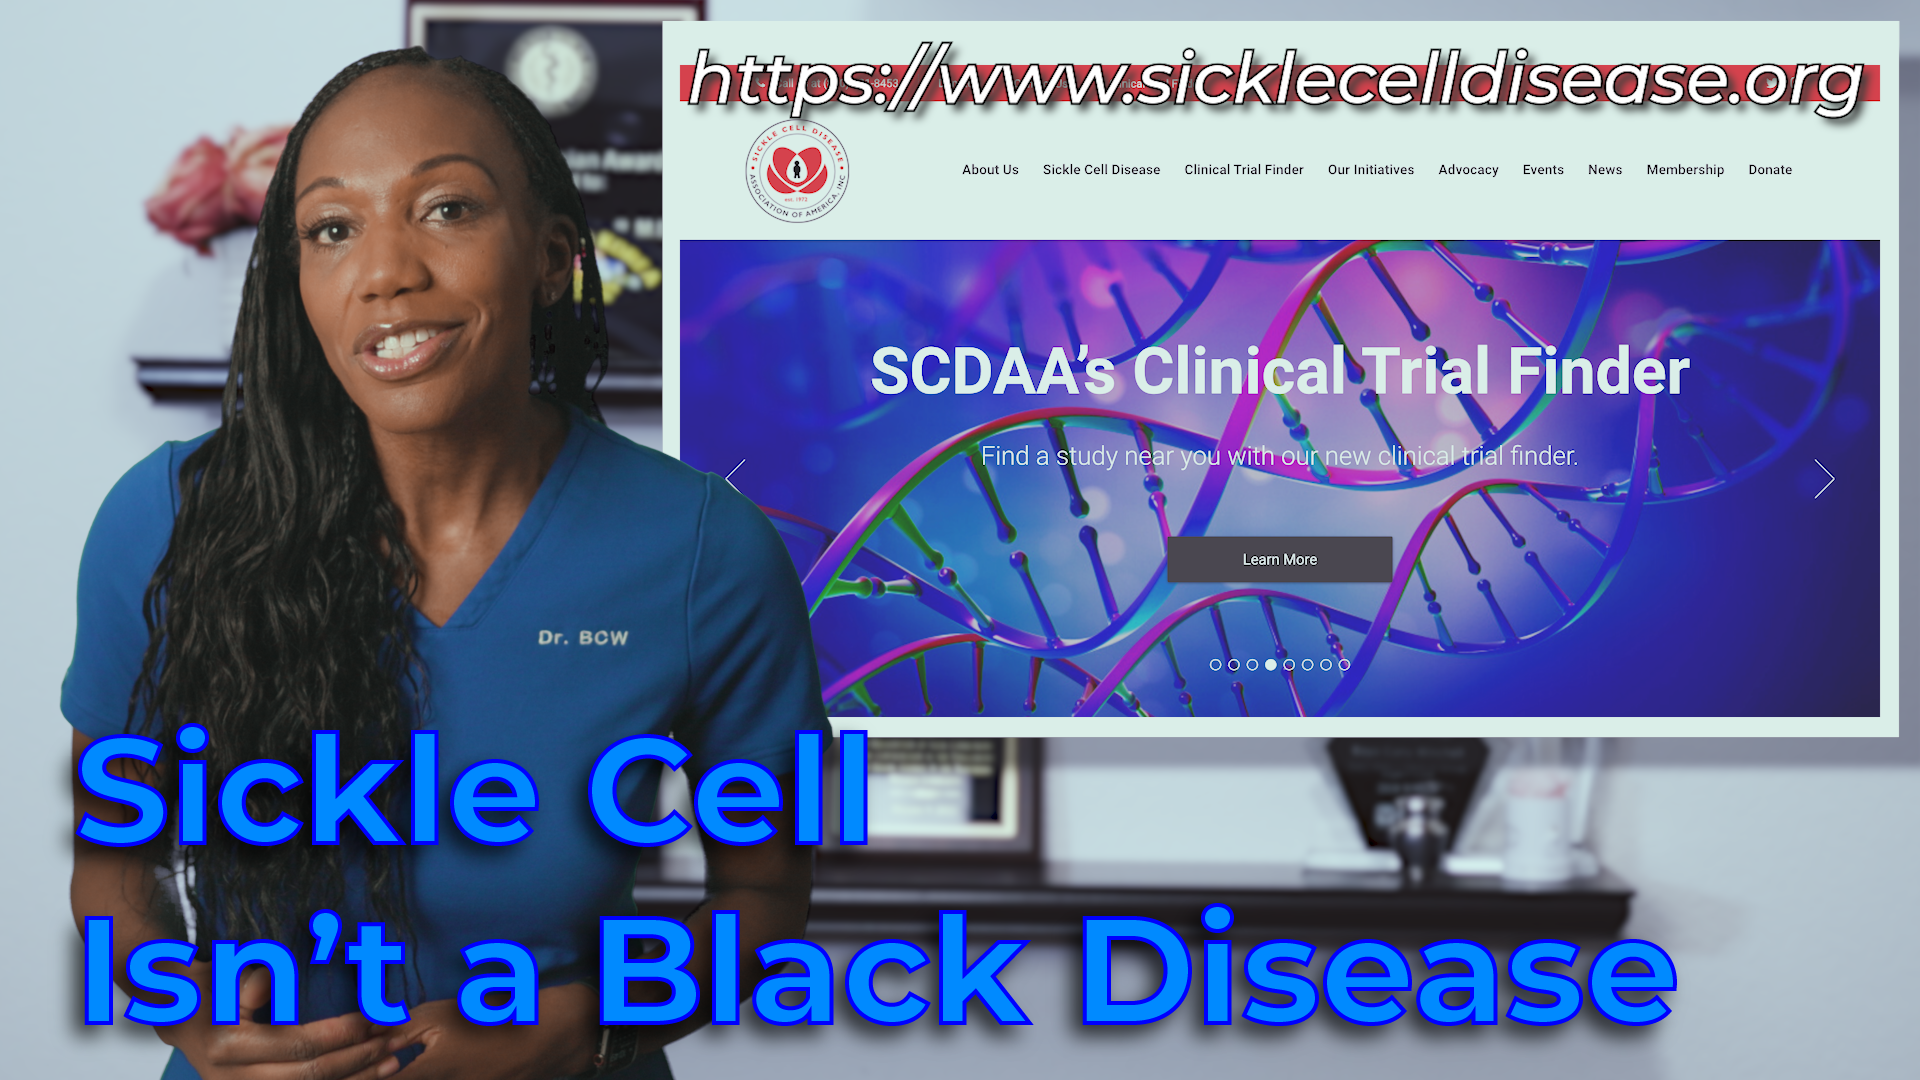 Sickle Cell Isn’t a Black Disease